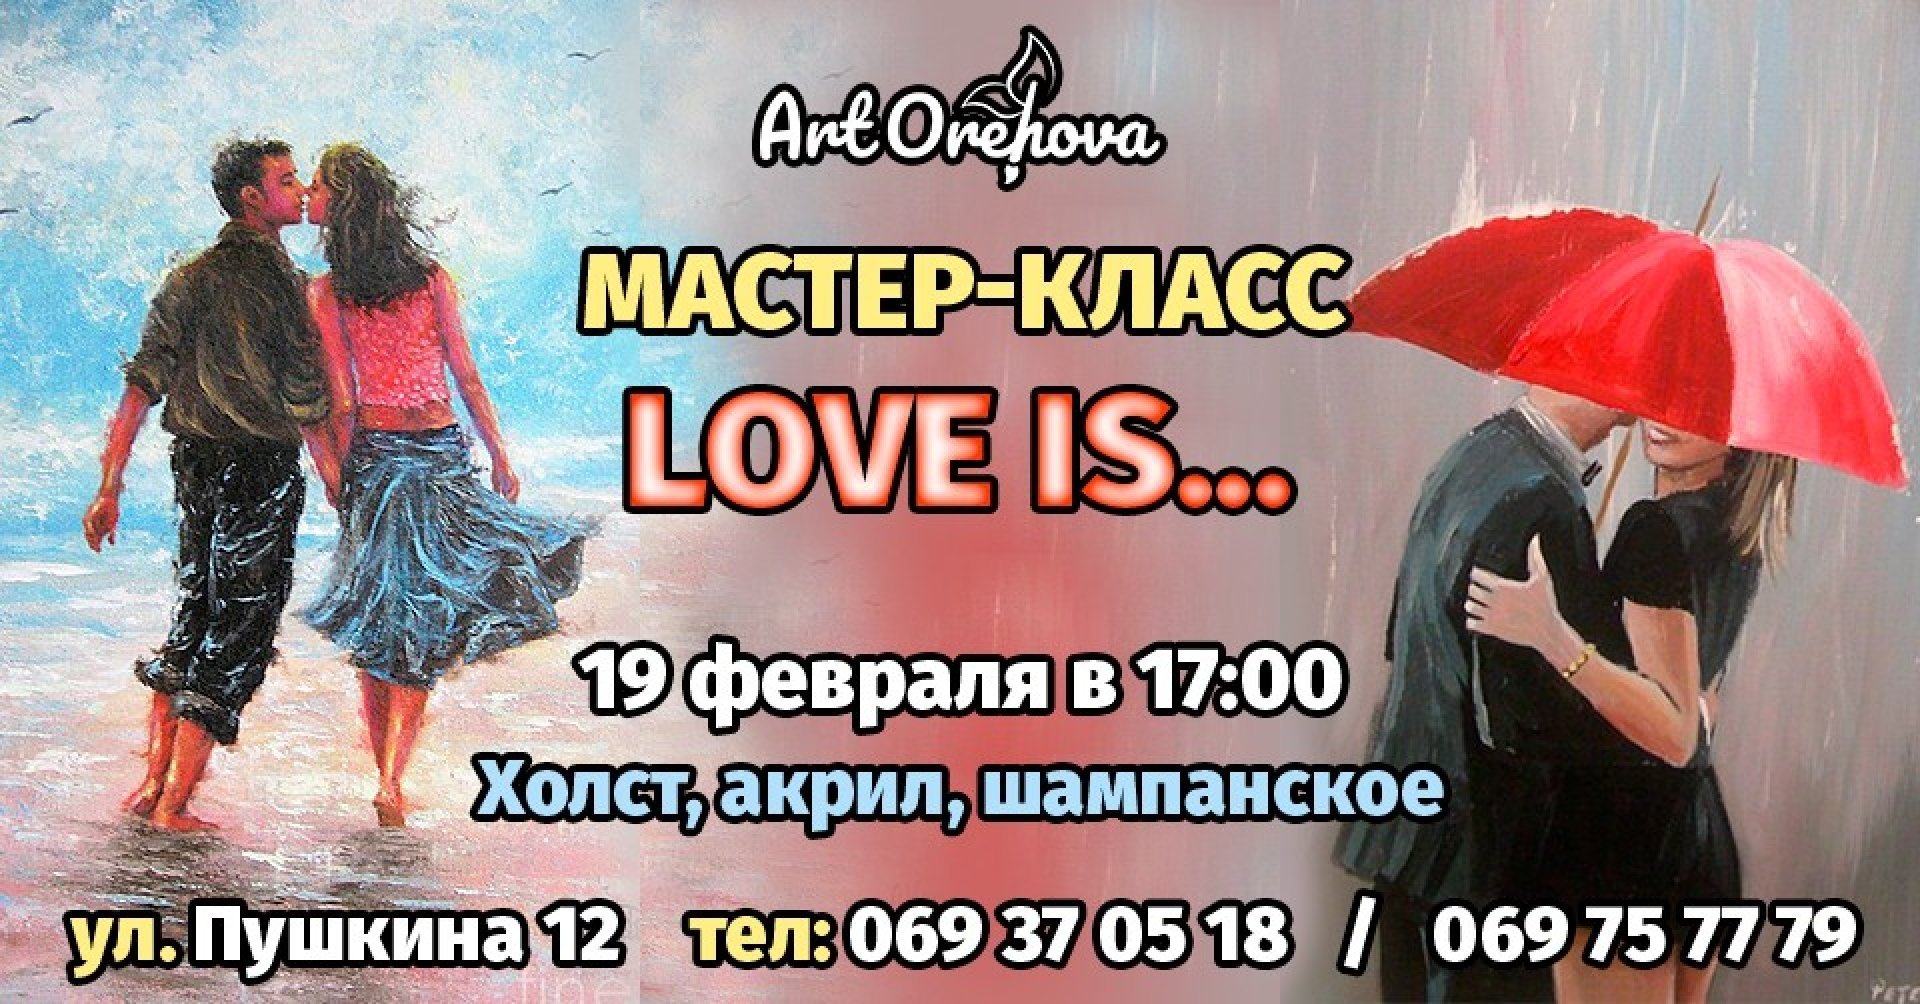 Мастер-класс "Love is..."